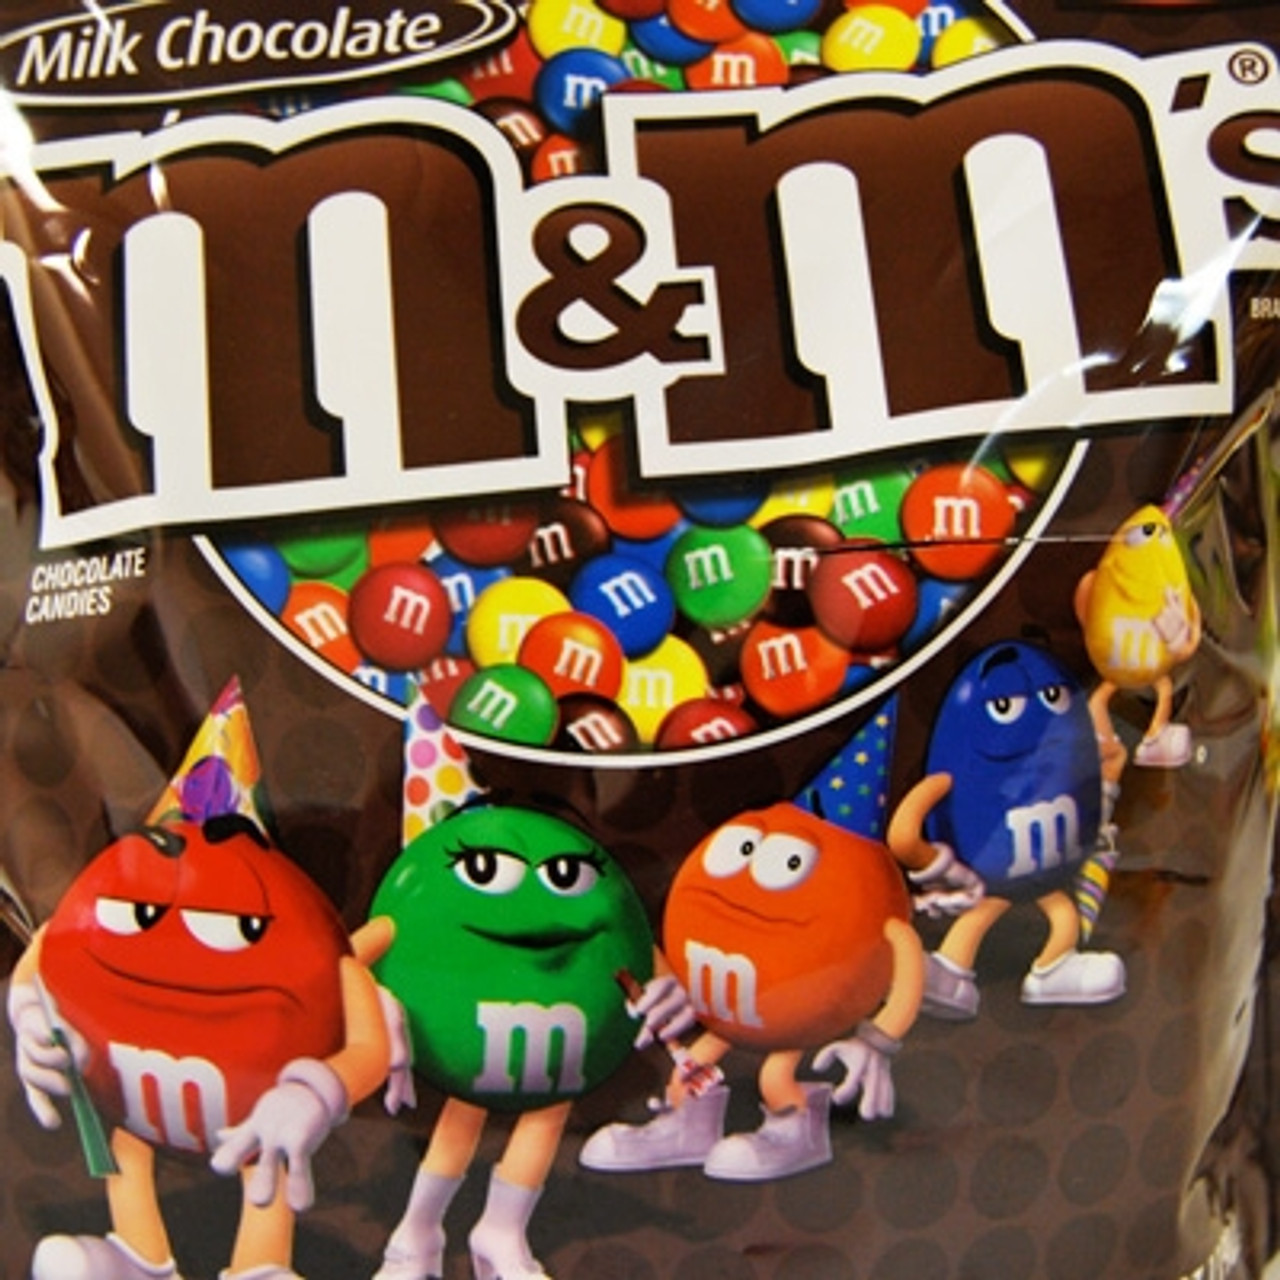 Rainbow M&M's Milk Chocolate Candy - Bulk M&M's • Oh! Nuts®